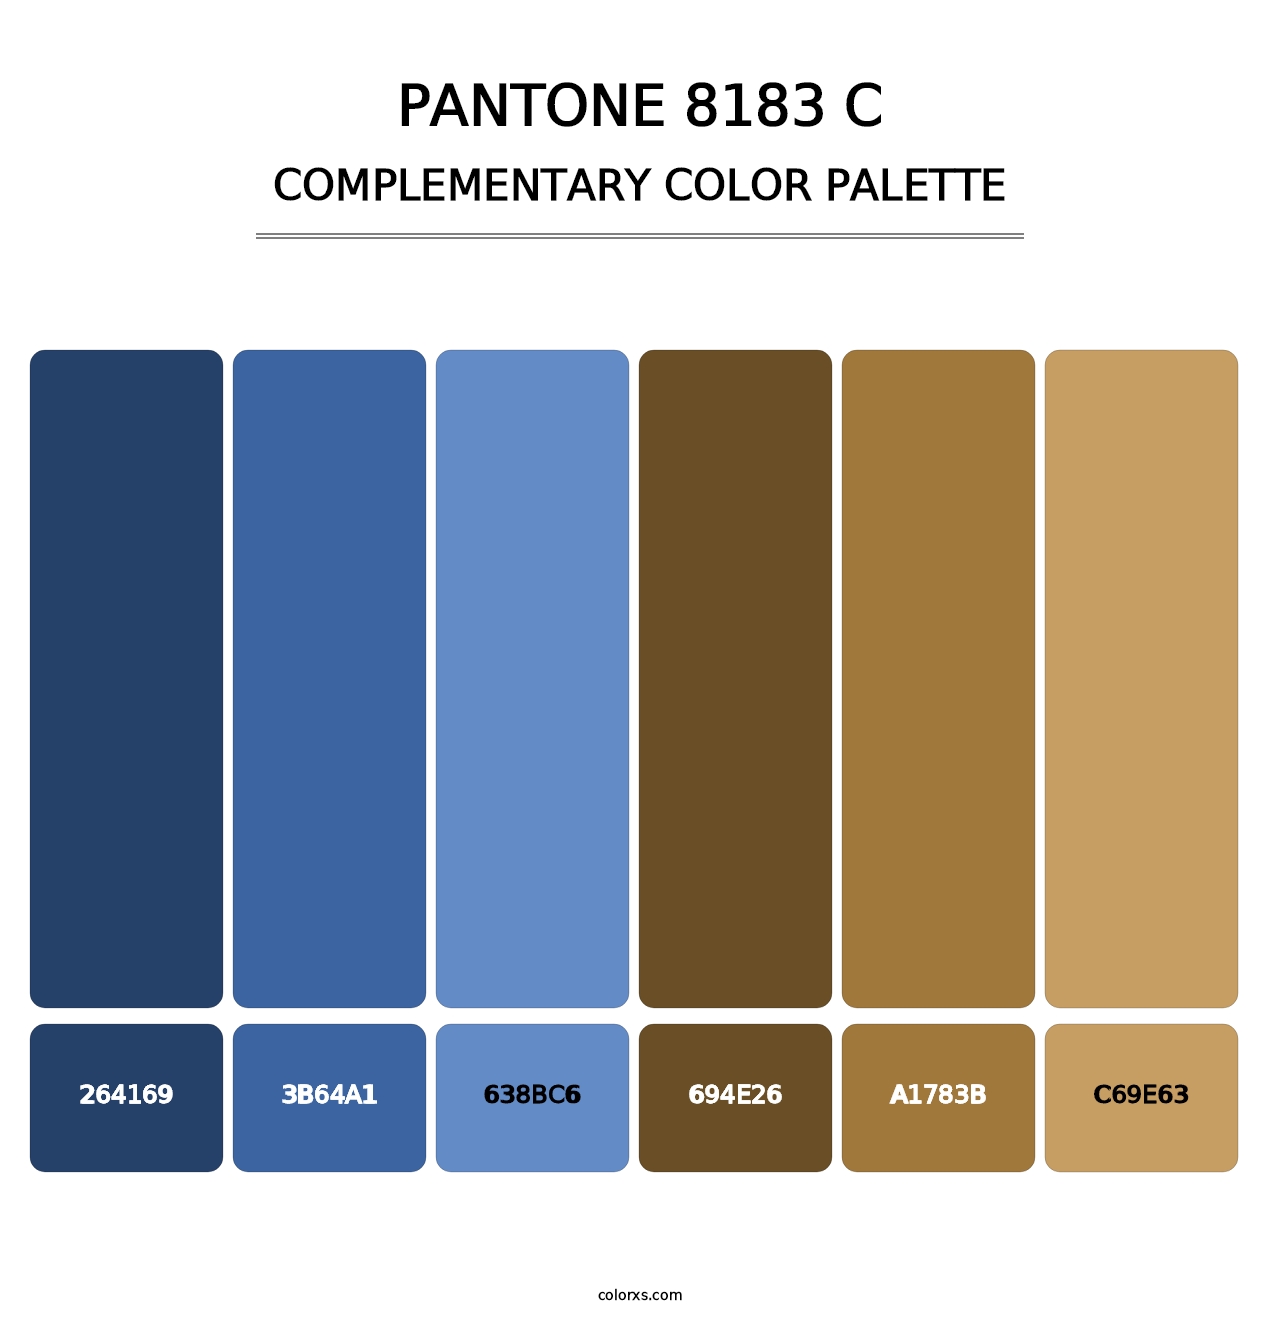 PANTONE 8183 C - Complementary Color Palette